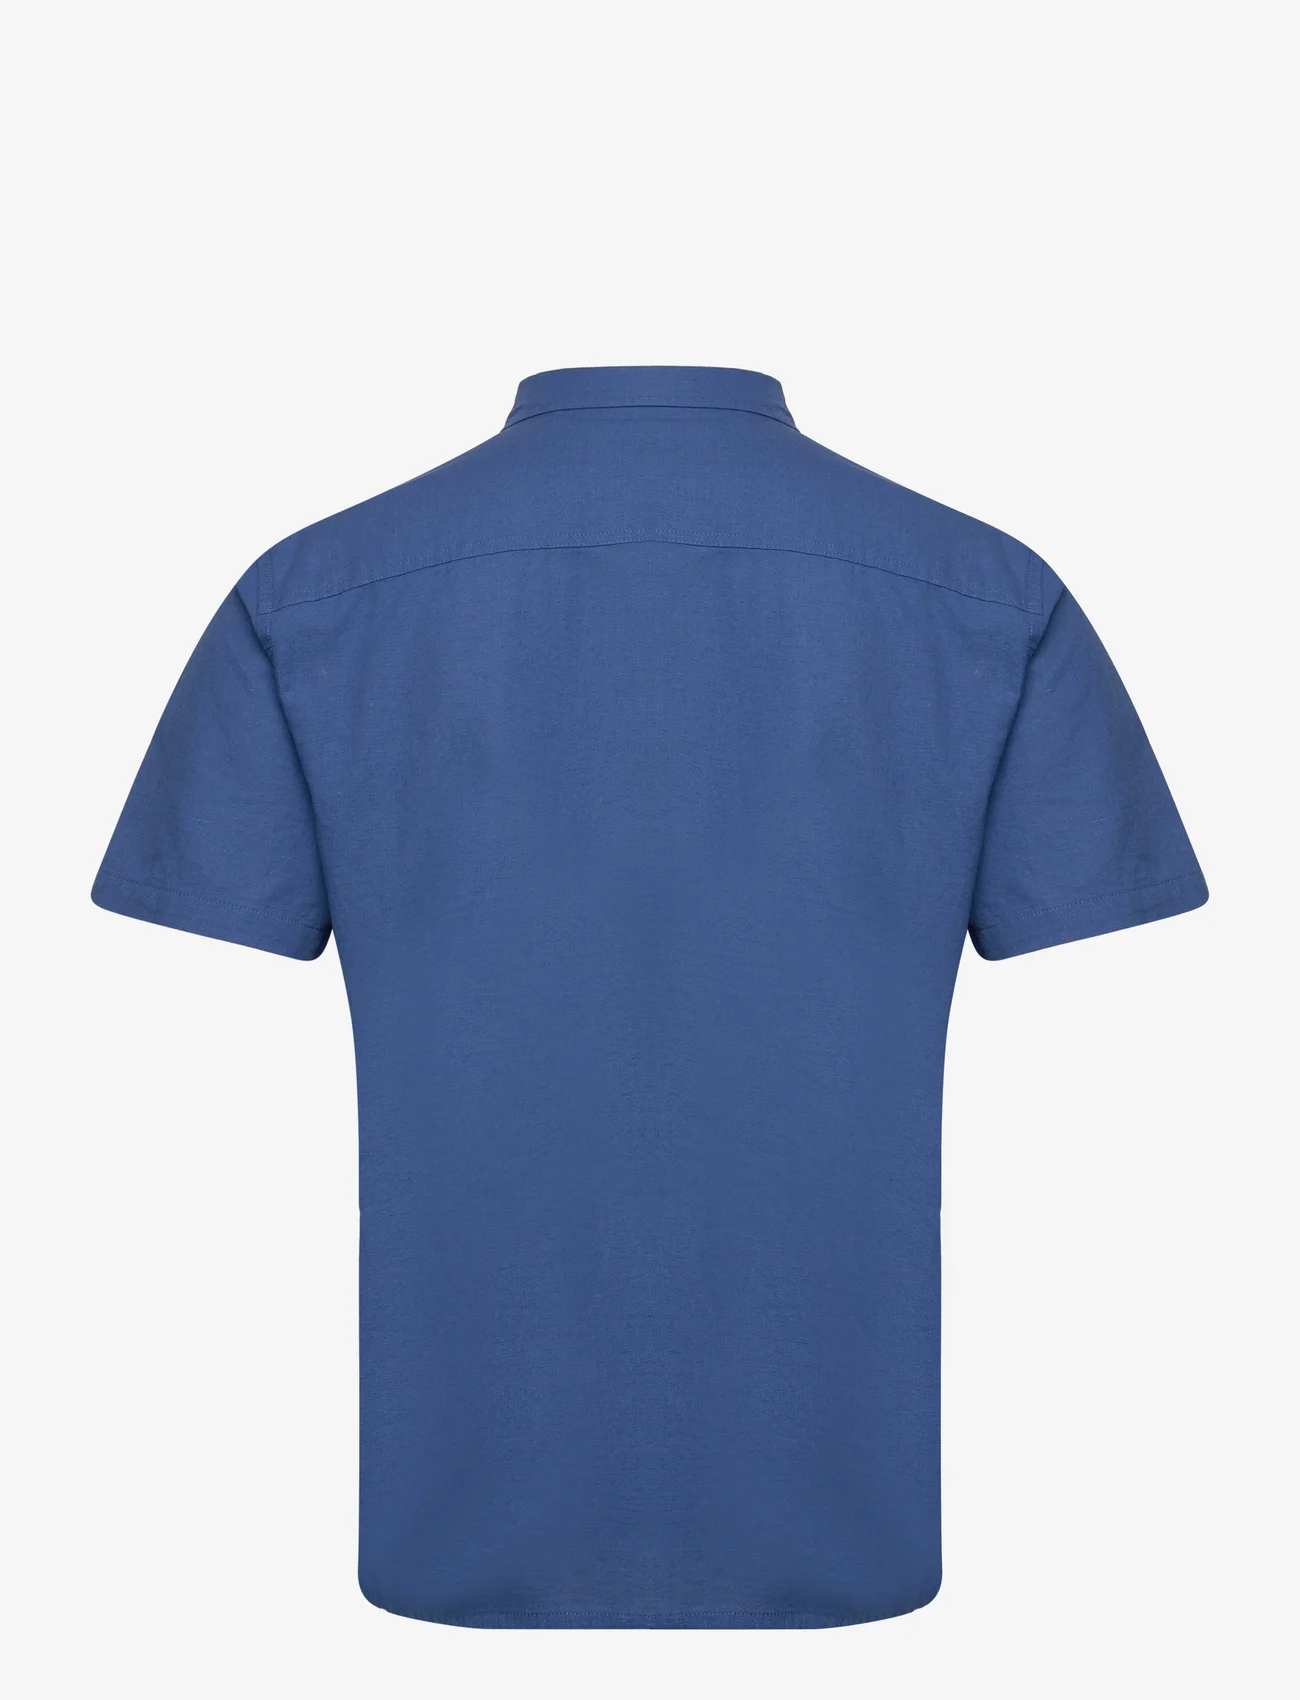 Blend - Shirt - madalaimad hinnad - delft - 1